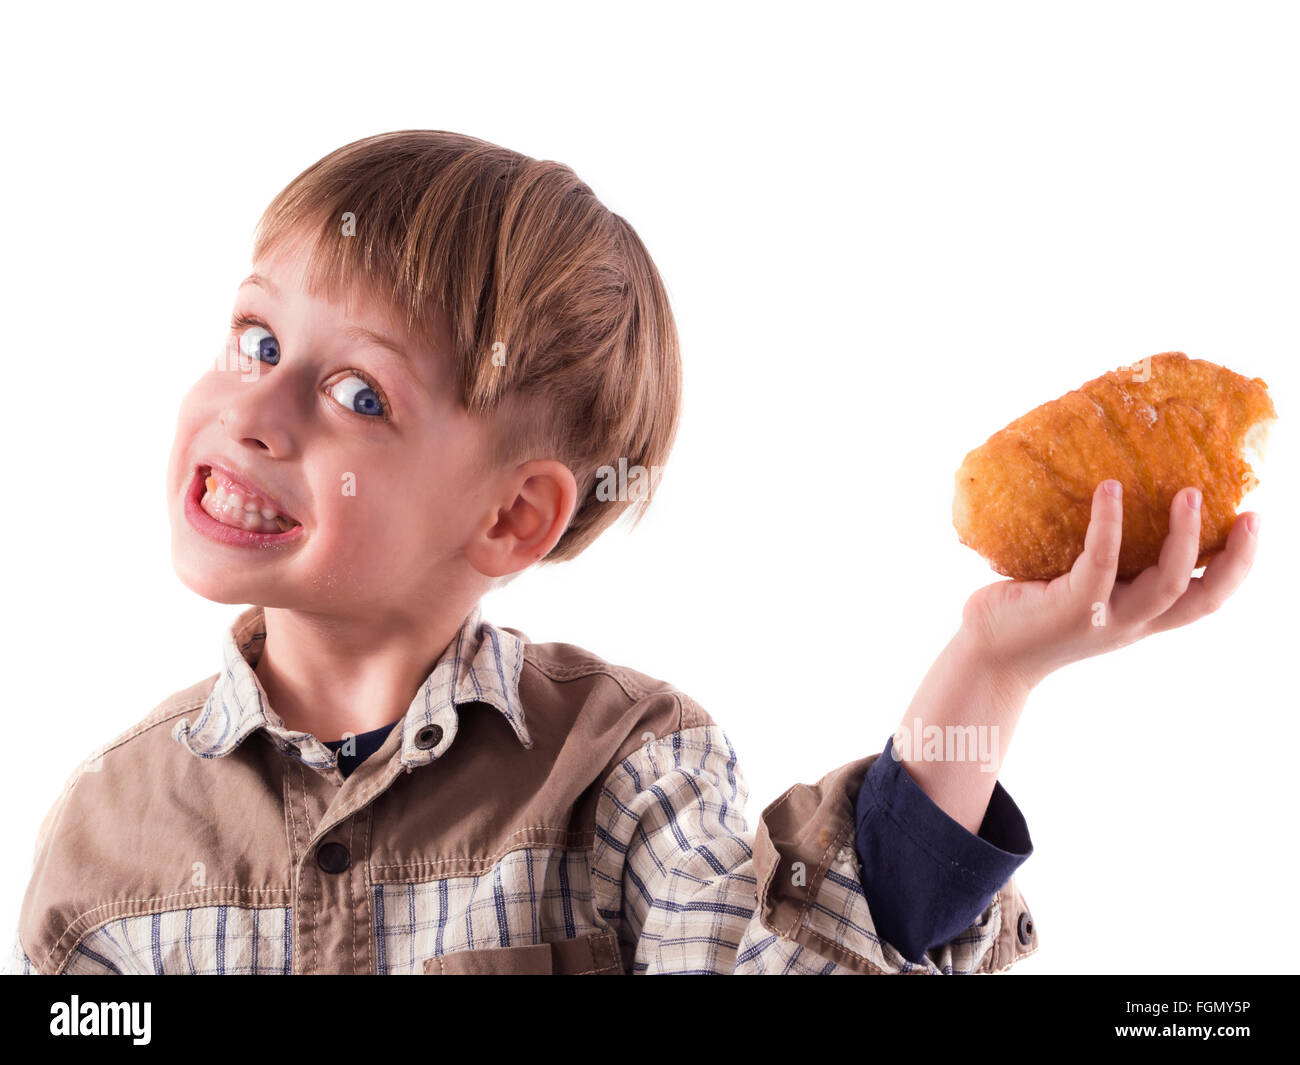 boy eating donut Stock Photo